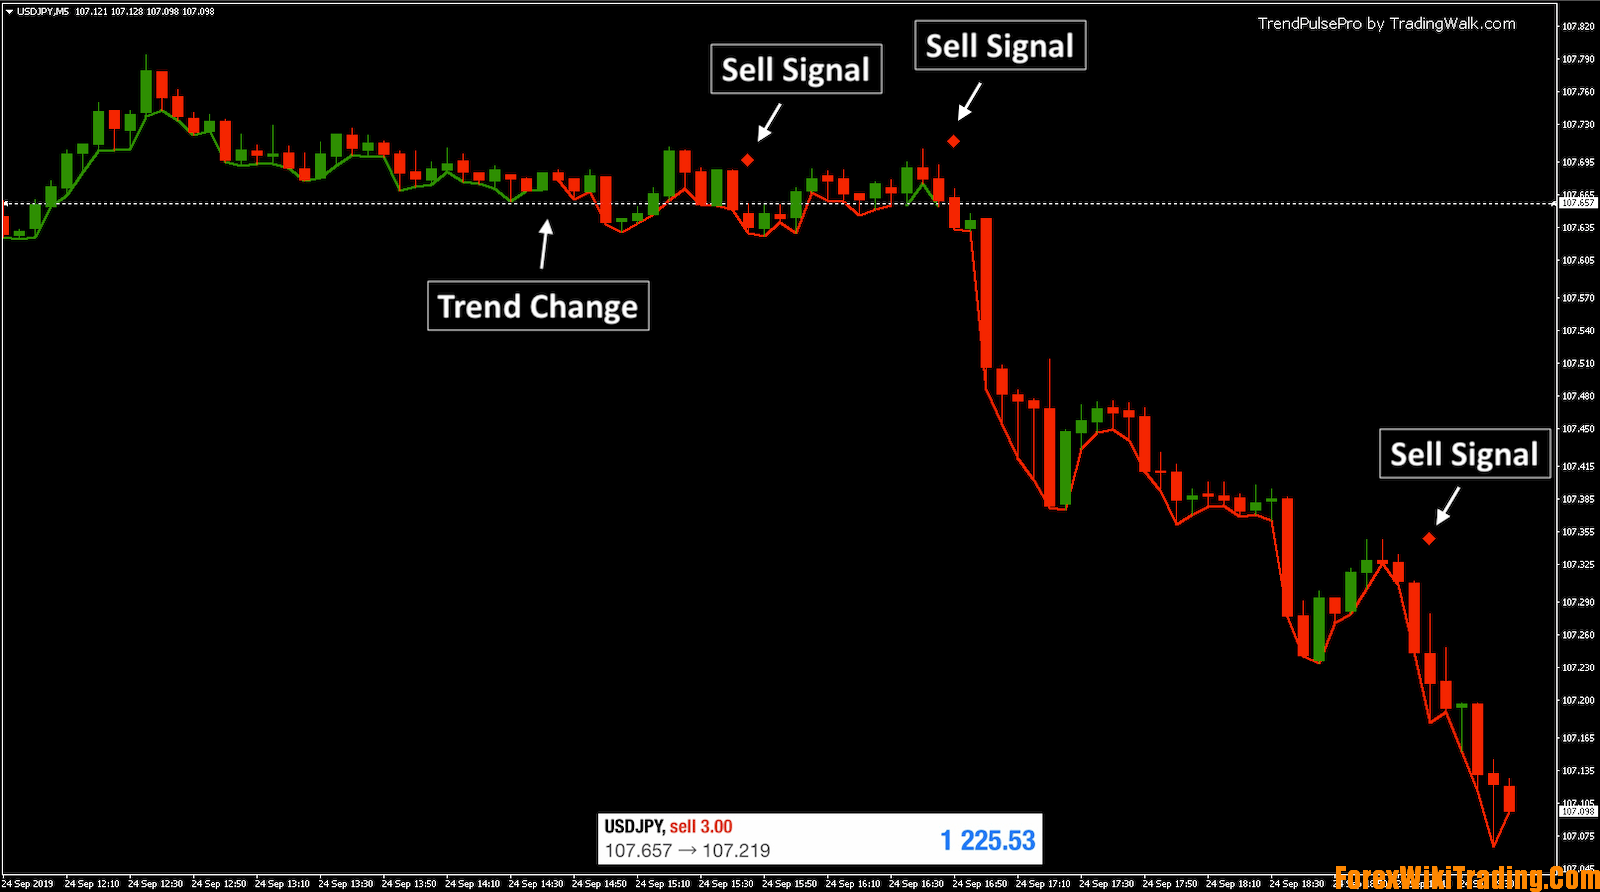 Momentum Trend Pro Big Trading Signals